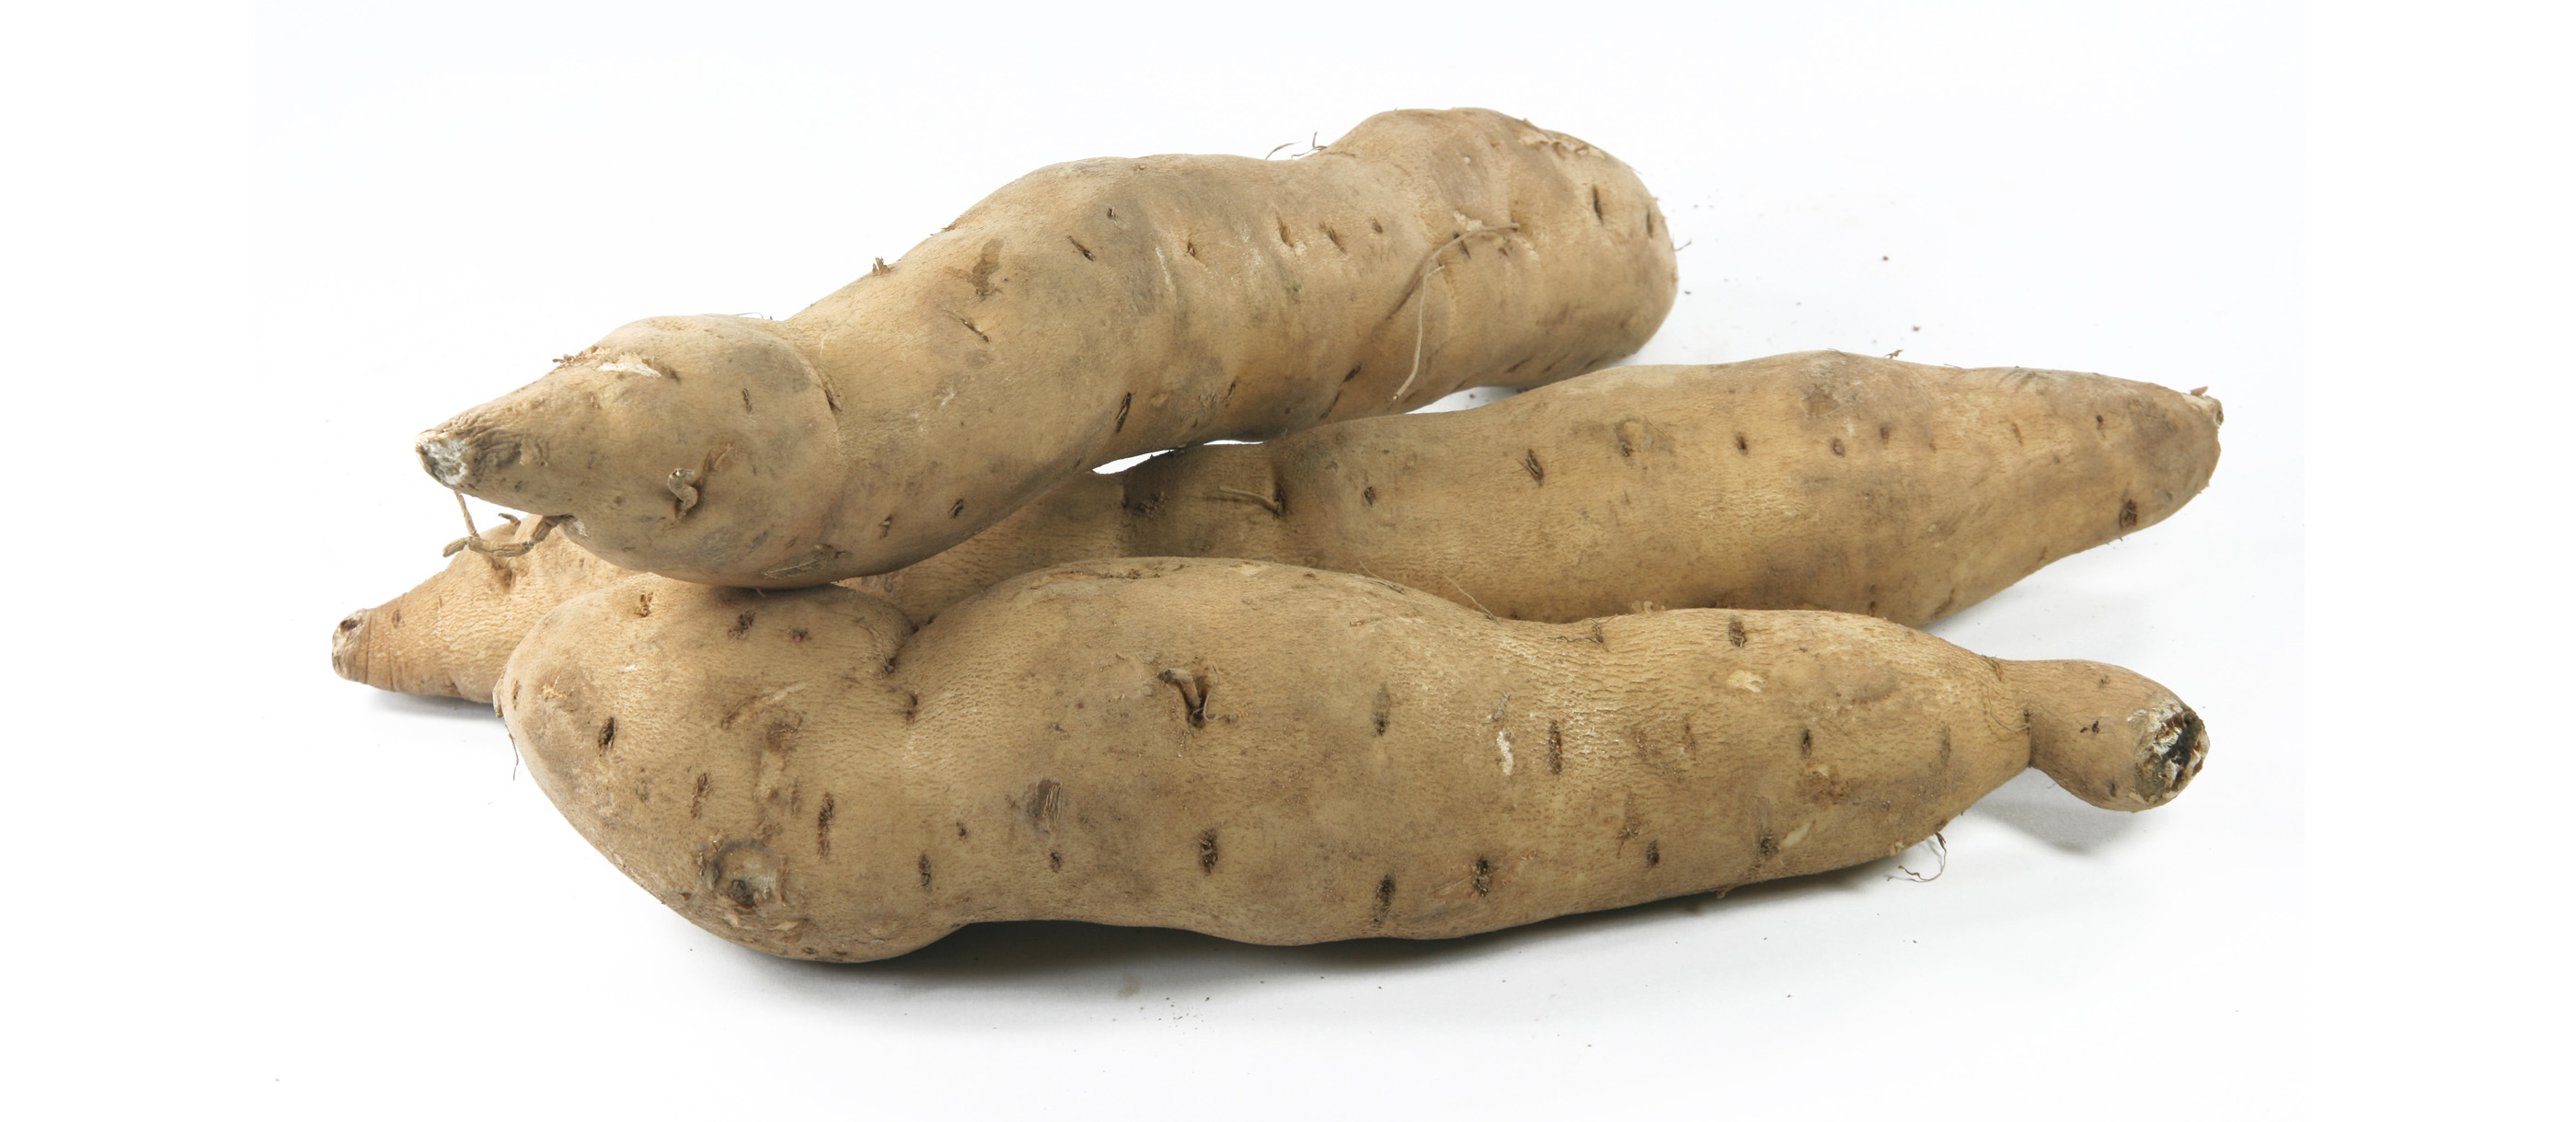 Tongan Potato : Sweet Potatoes Of The World 14 Sweet Potato Types Tasteatlas : All root crops ...